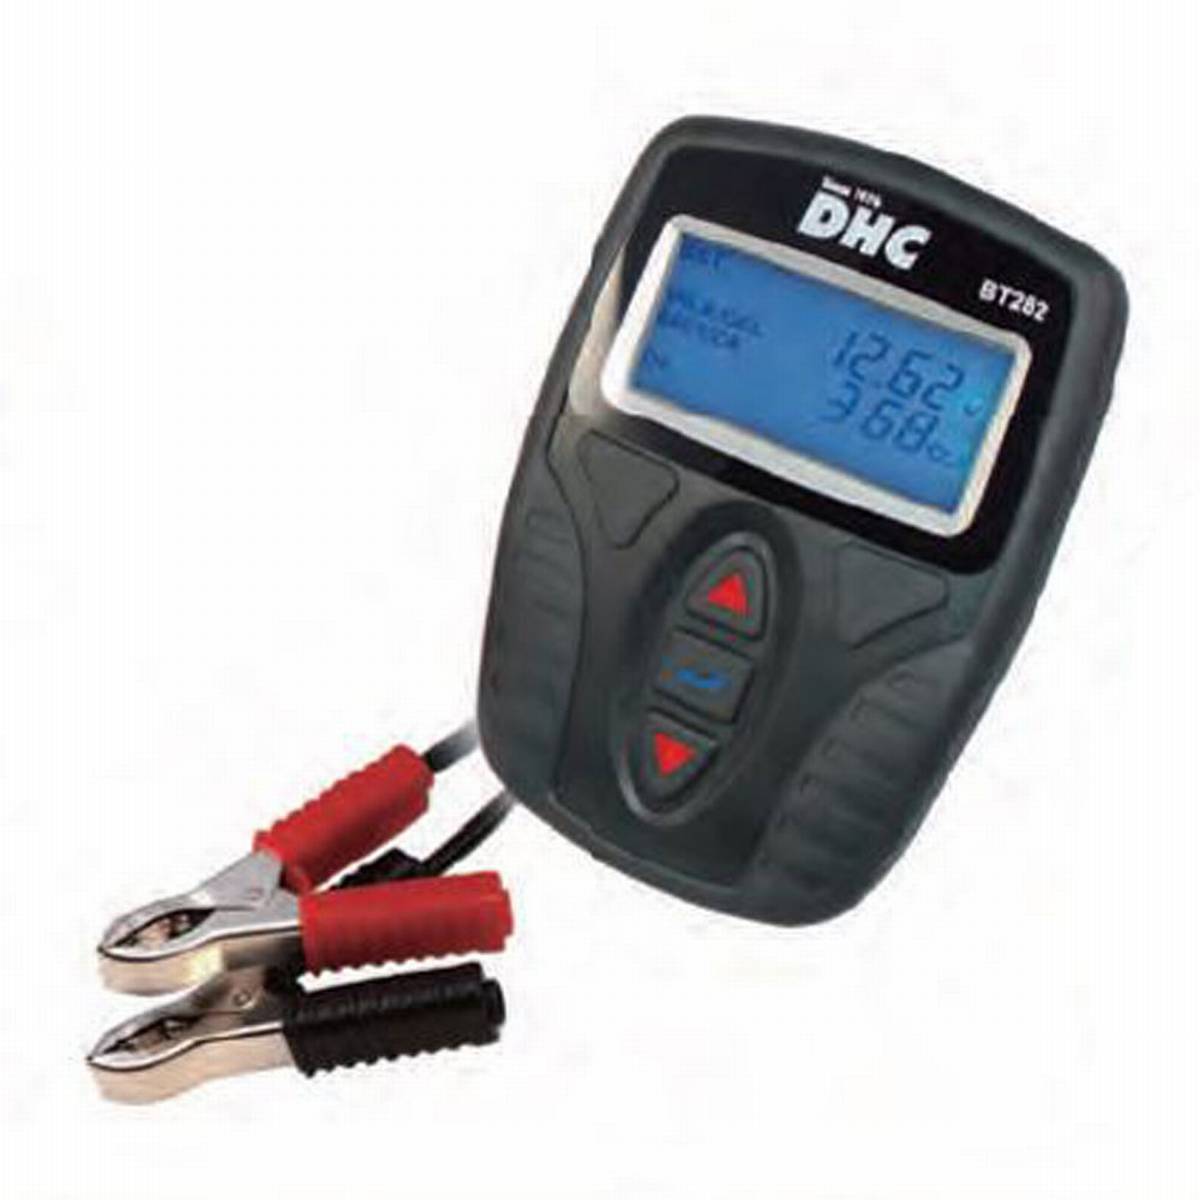 Tester di batteria DHC BT282 per batterie auto 12V Start-Stop